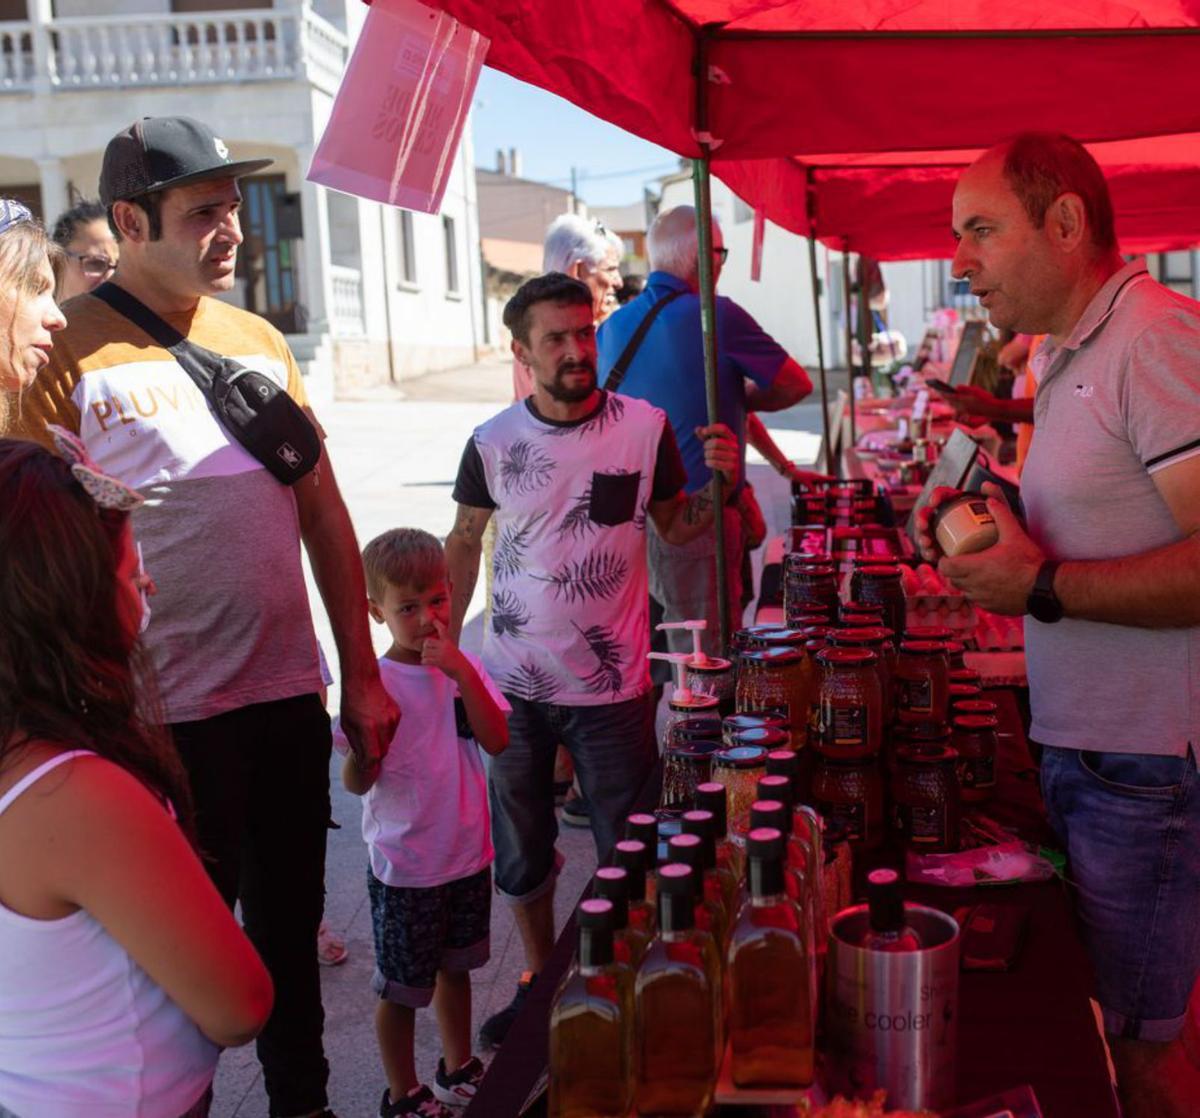 Un maestro quesero llevó sus productos a la feria de Pereruela. | Emilio Fraile